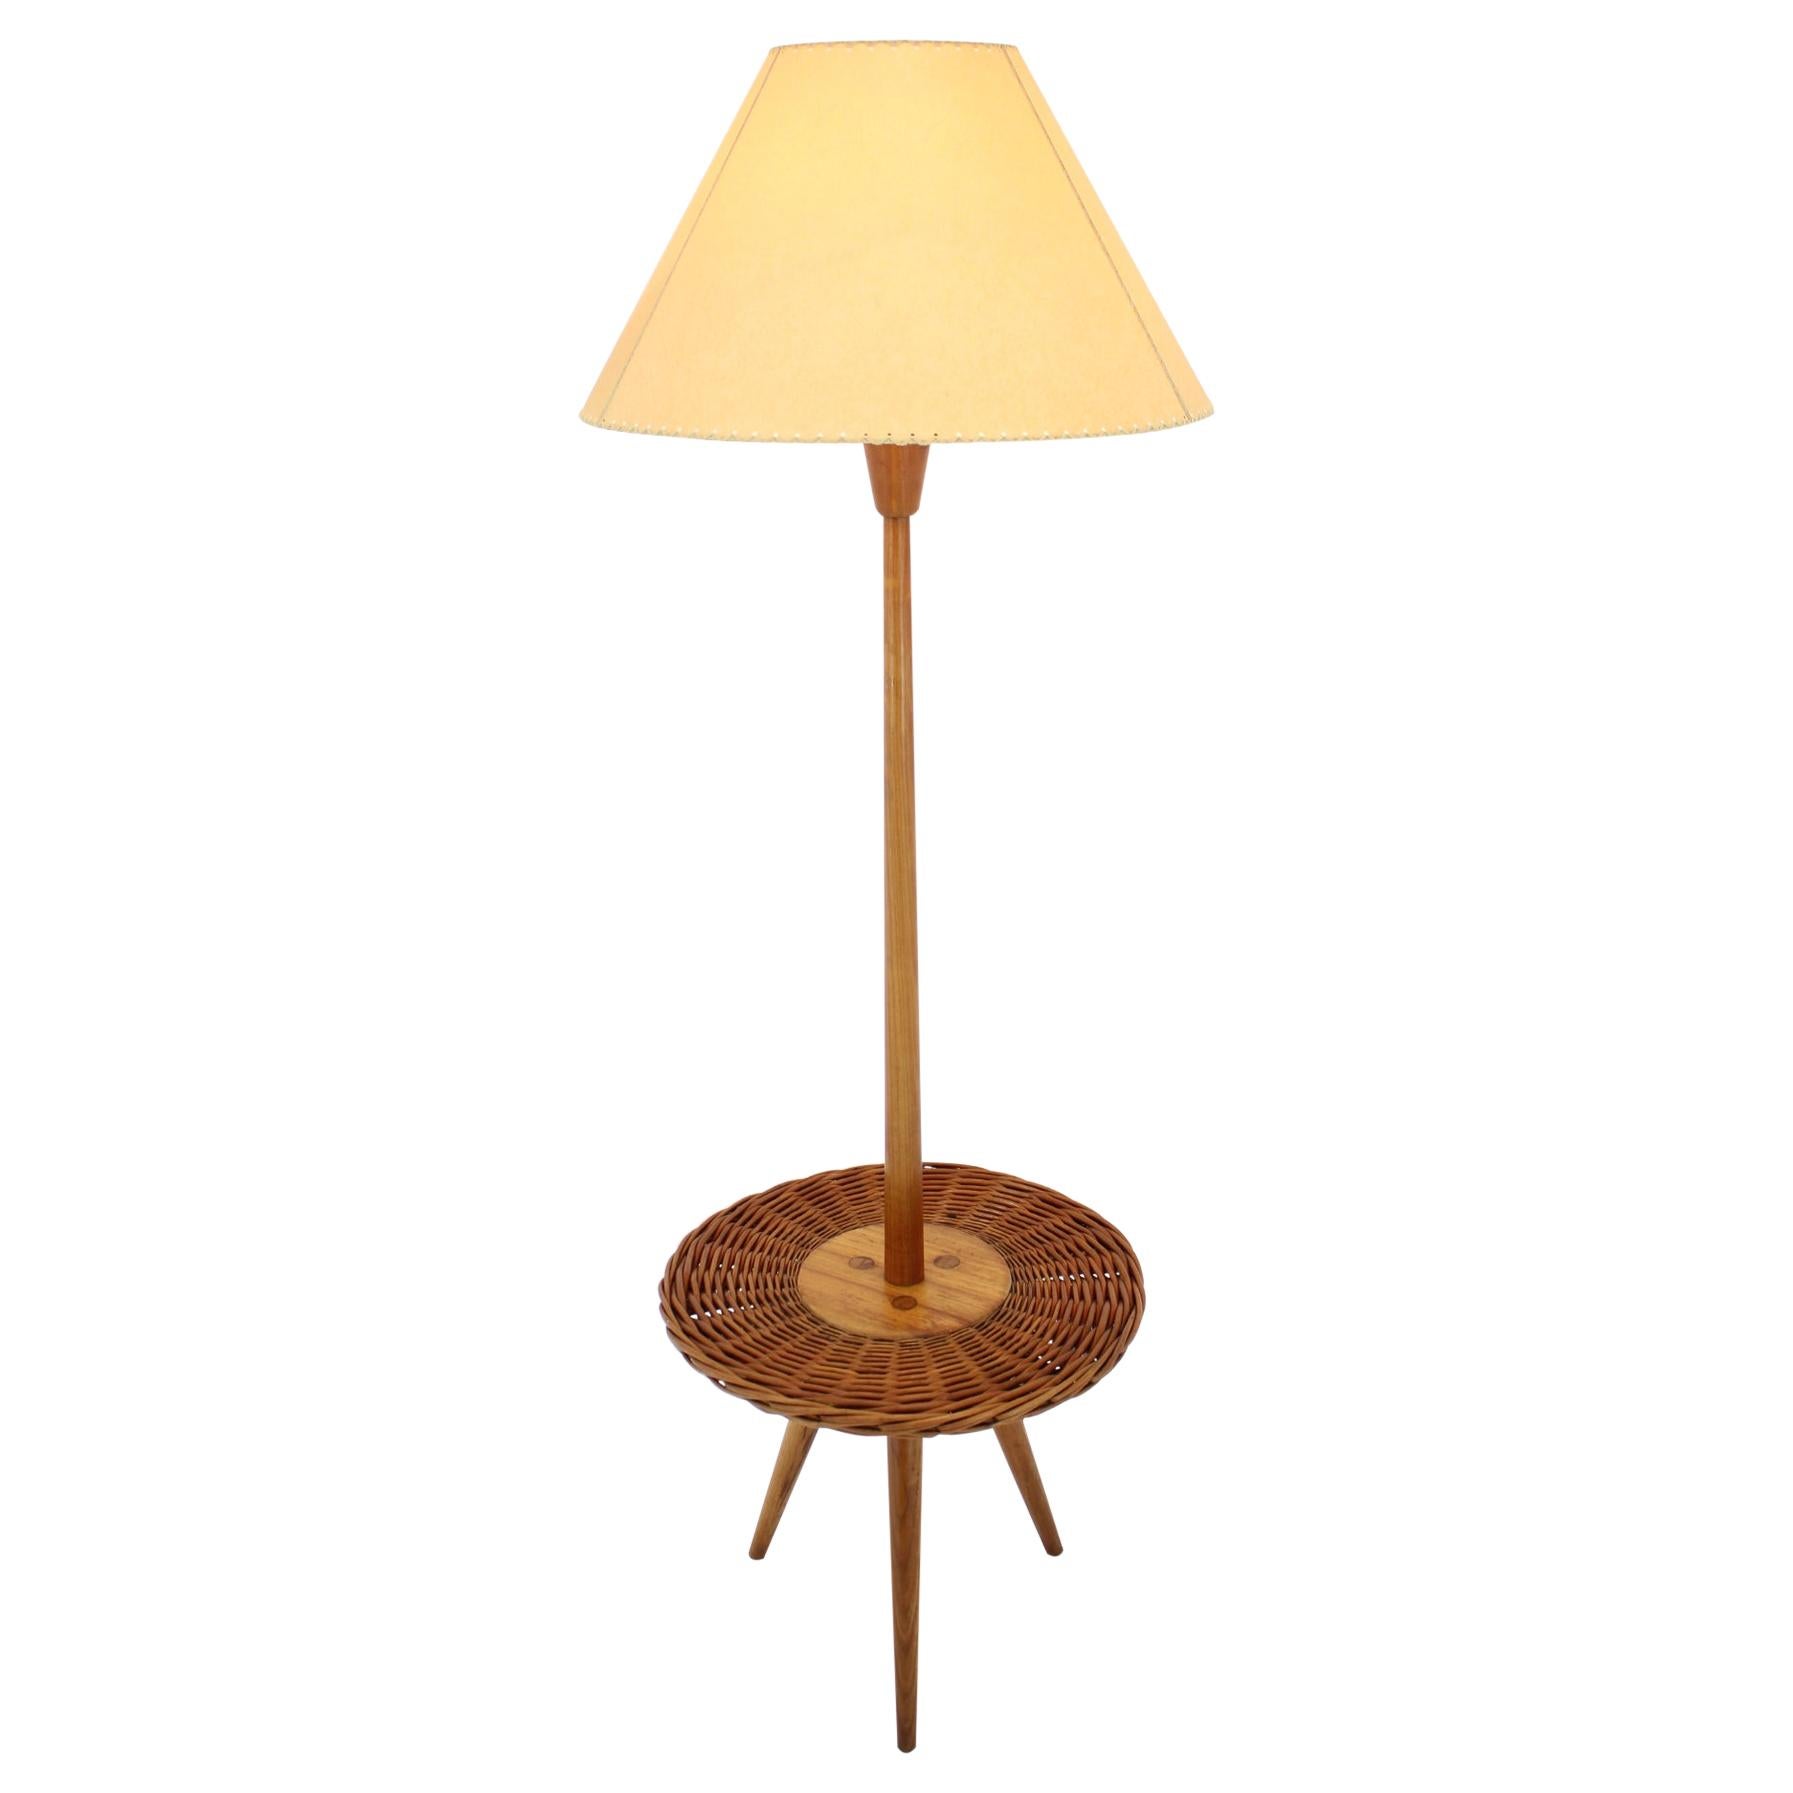 Midcentury Wooden Floor Lamp by Jan Kalous for ULUV / 1950s, Restored